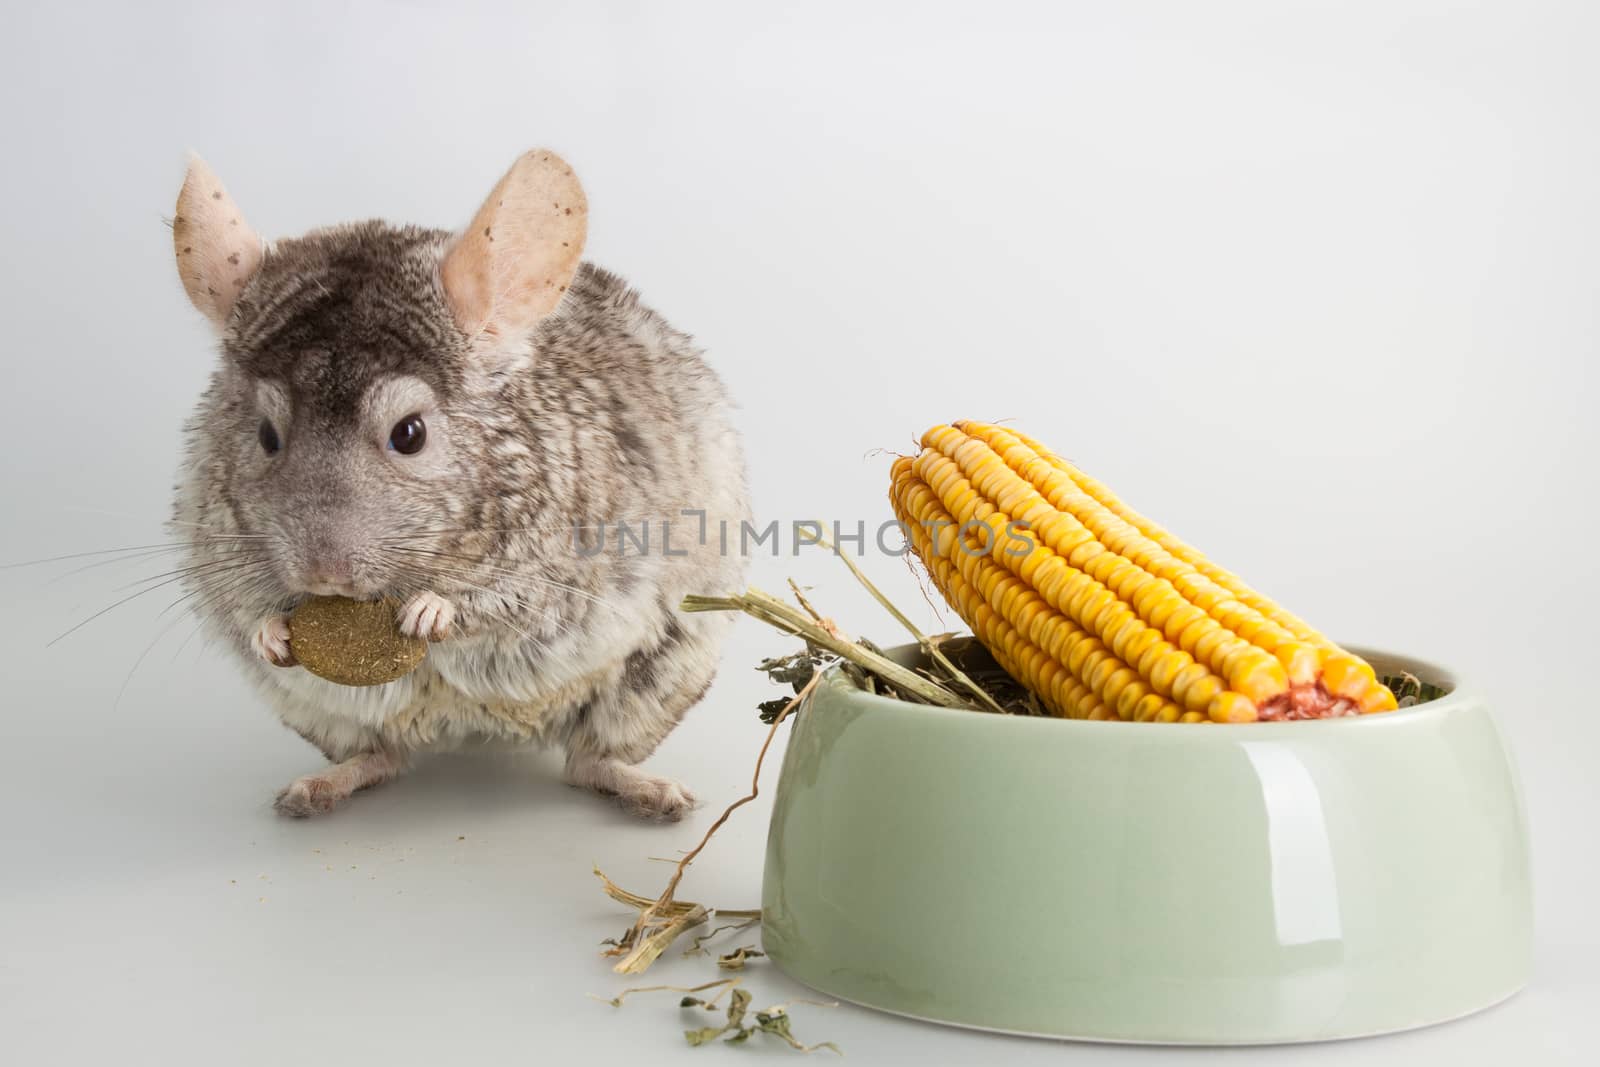 Chinchilla rodent domestic pet animal by lanalanglois